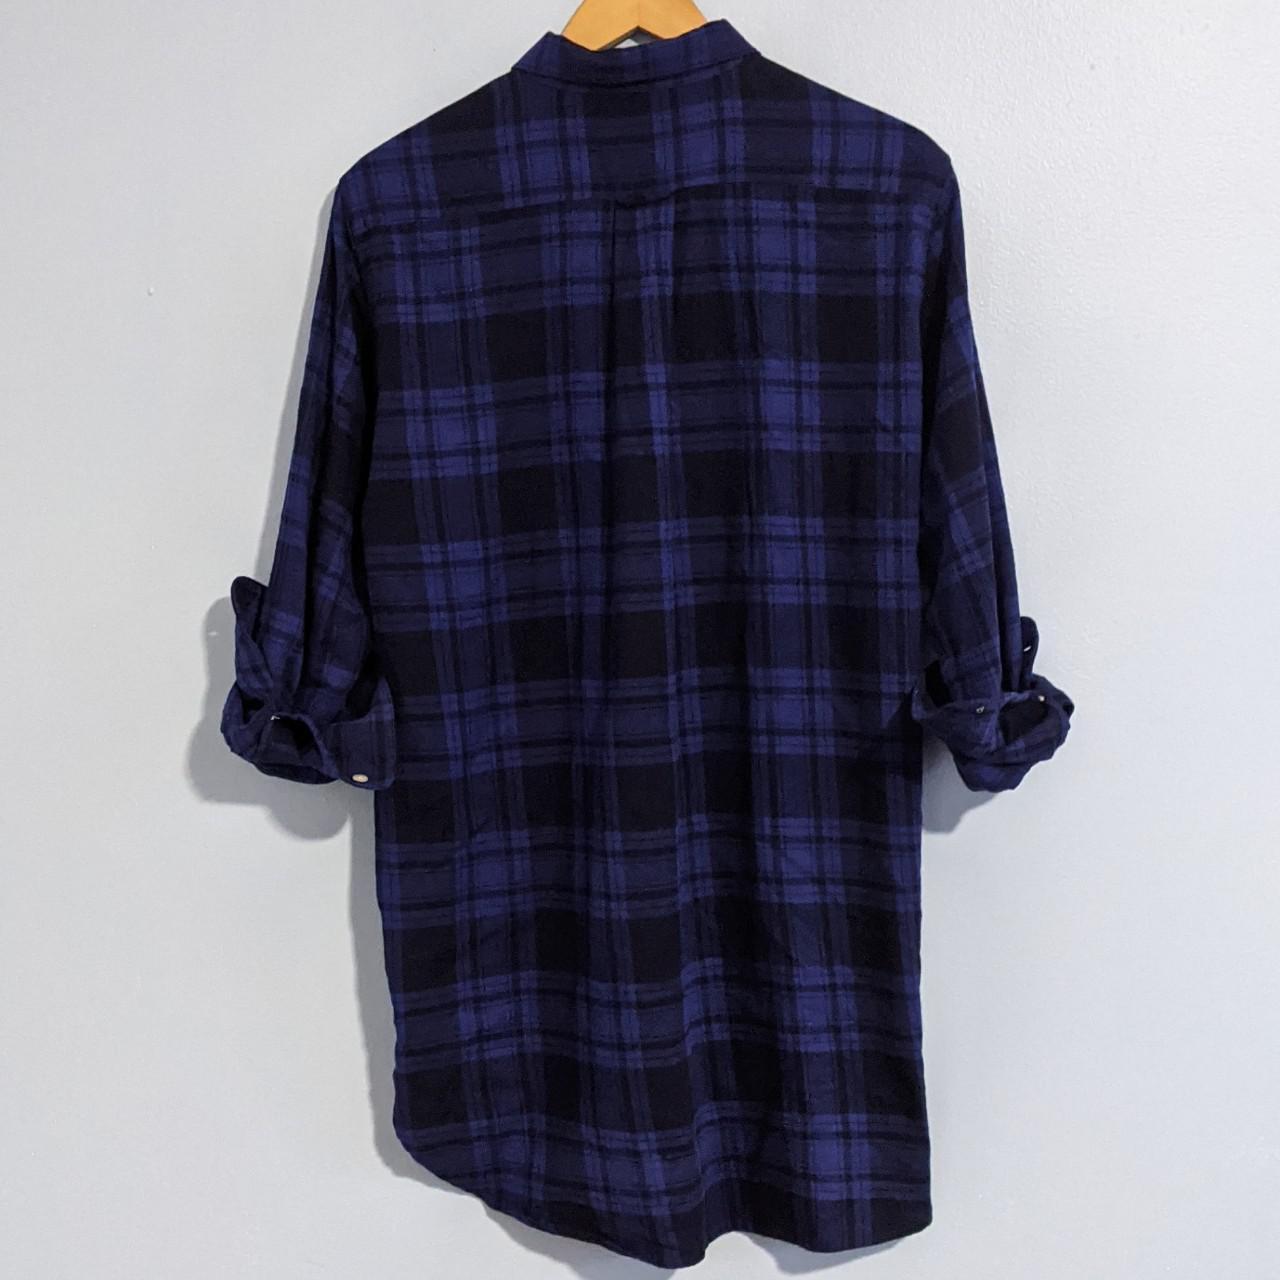 Product Image 3 - Blue and black plaid tunic.